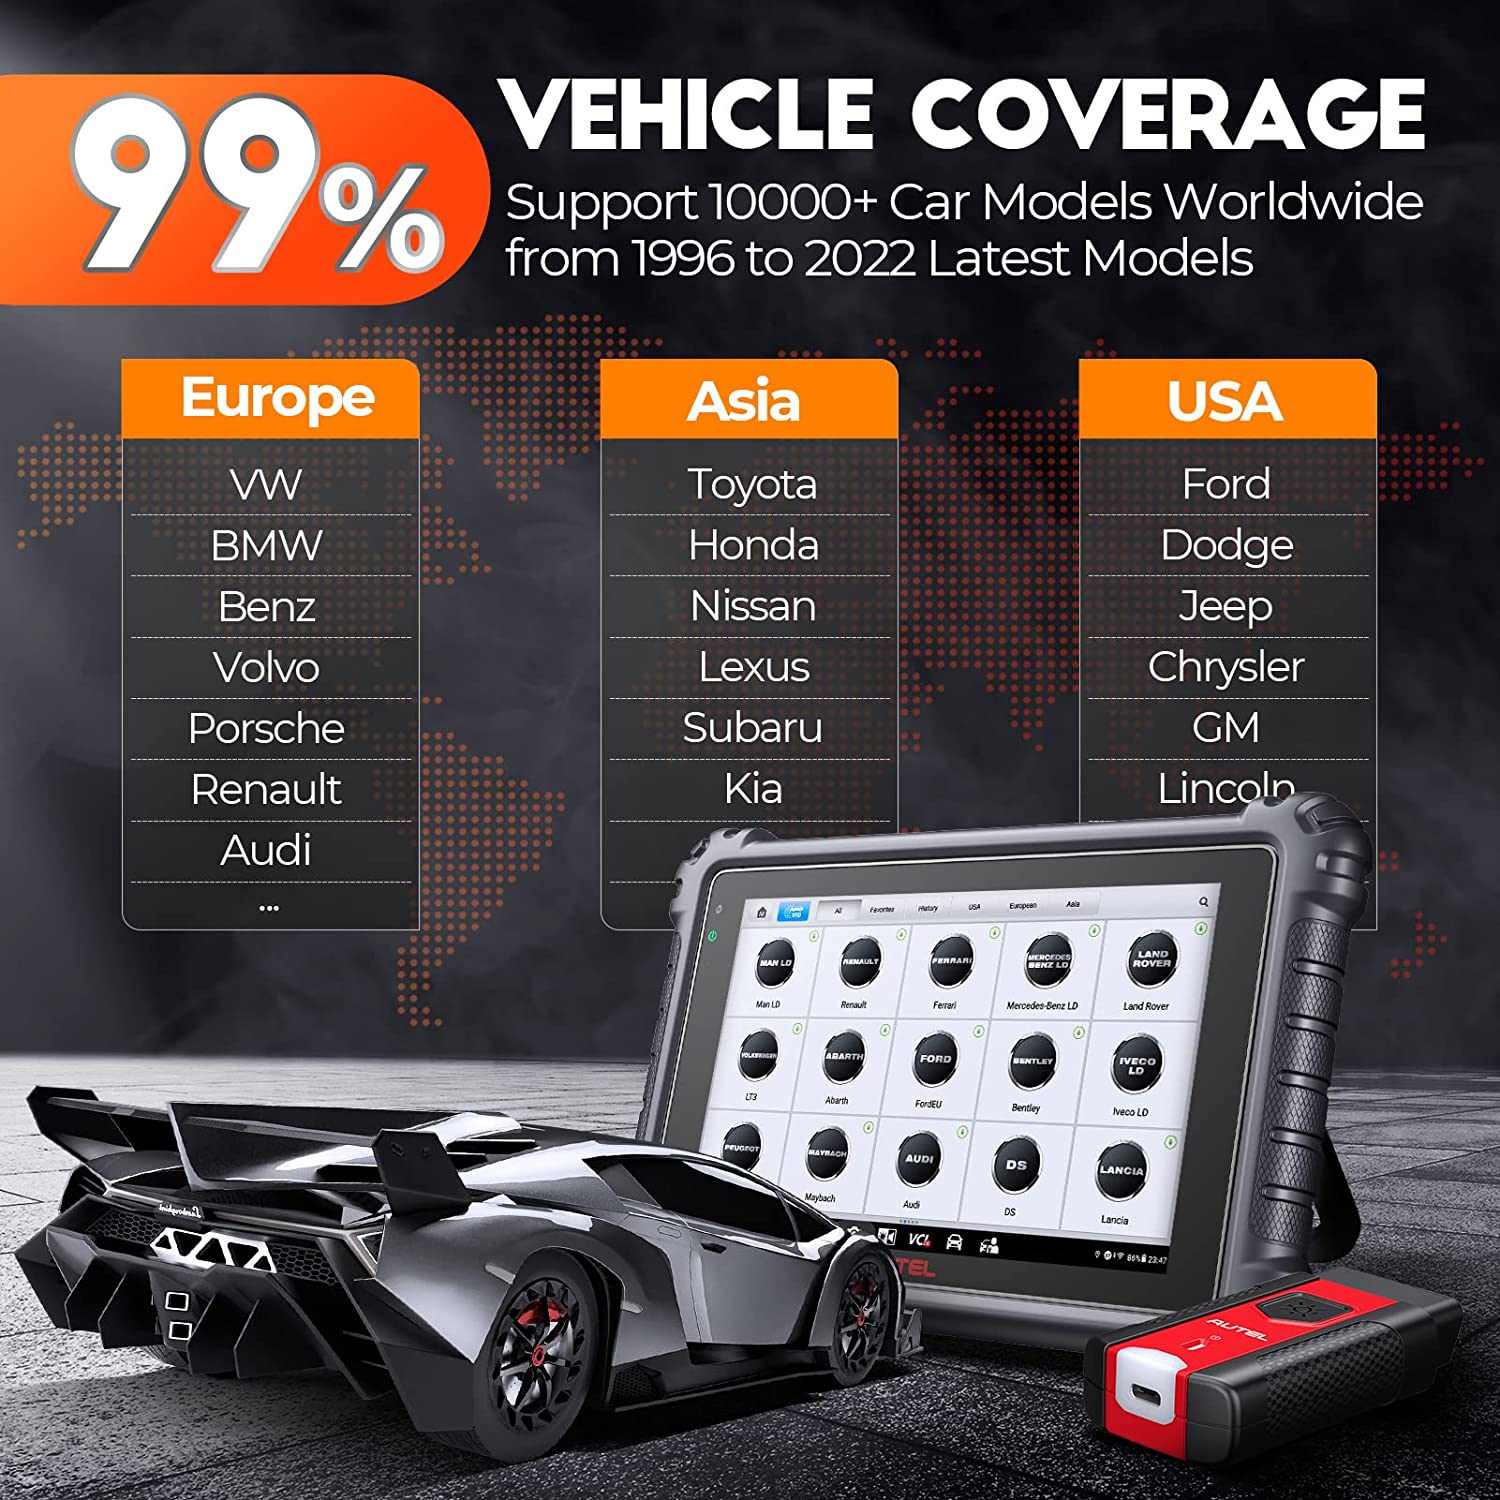 Autel MK906 Pro  vehicle coverage more than 10000+